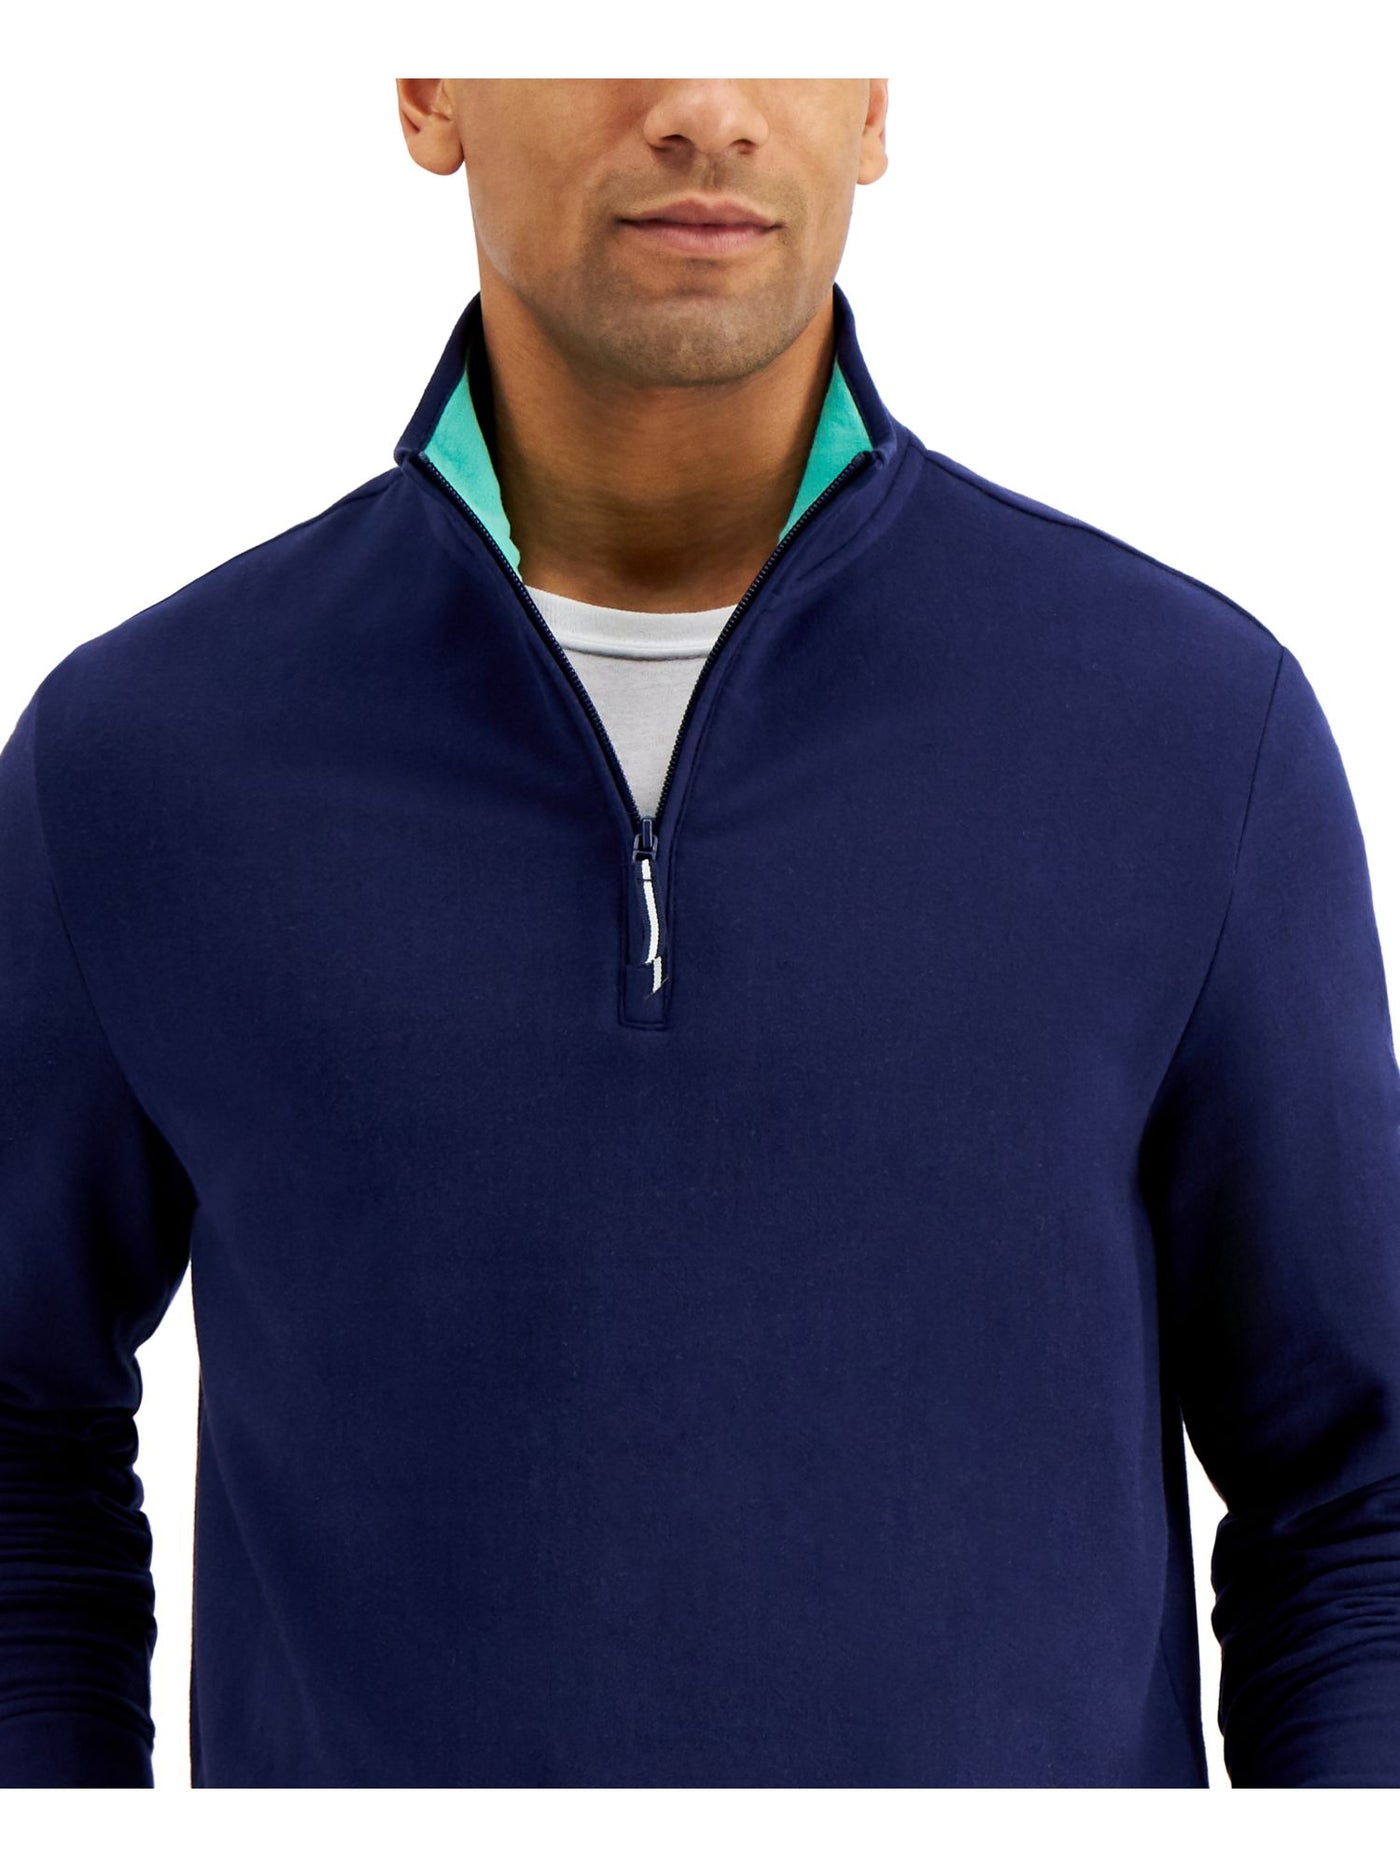 CLUBROOM Mens Blue Turtle Neck Classic Fit Quarter-Zip Fleece Pullover Sweater M